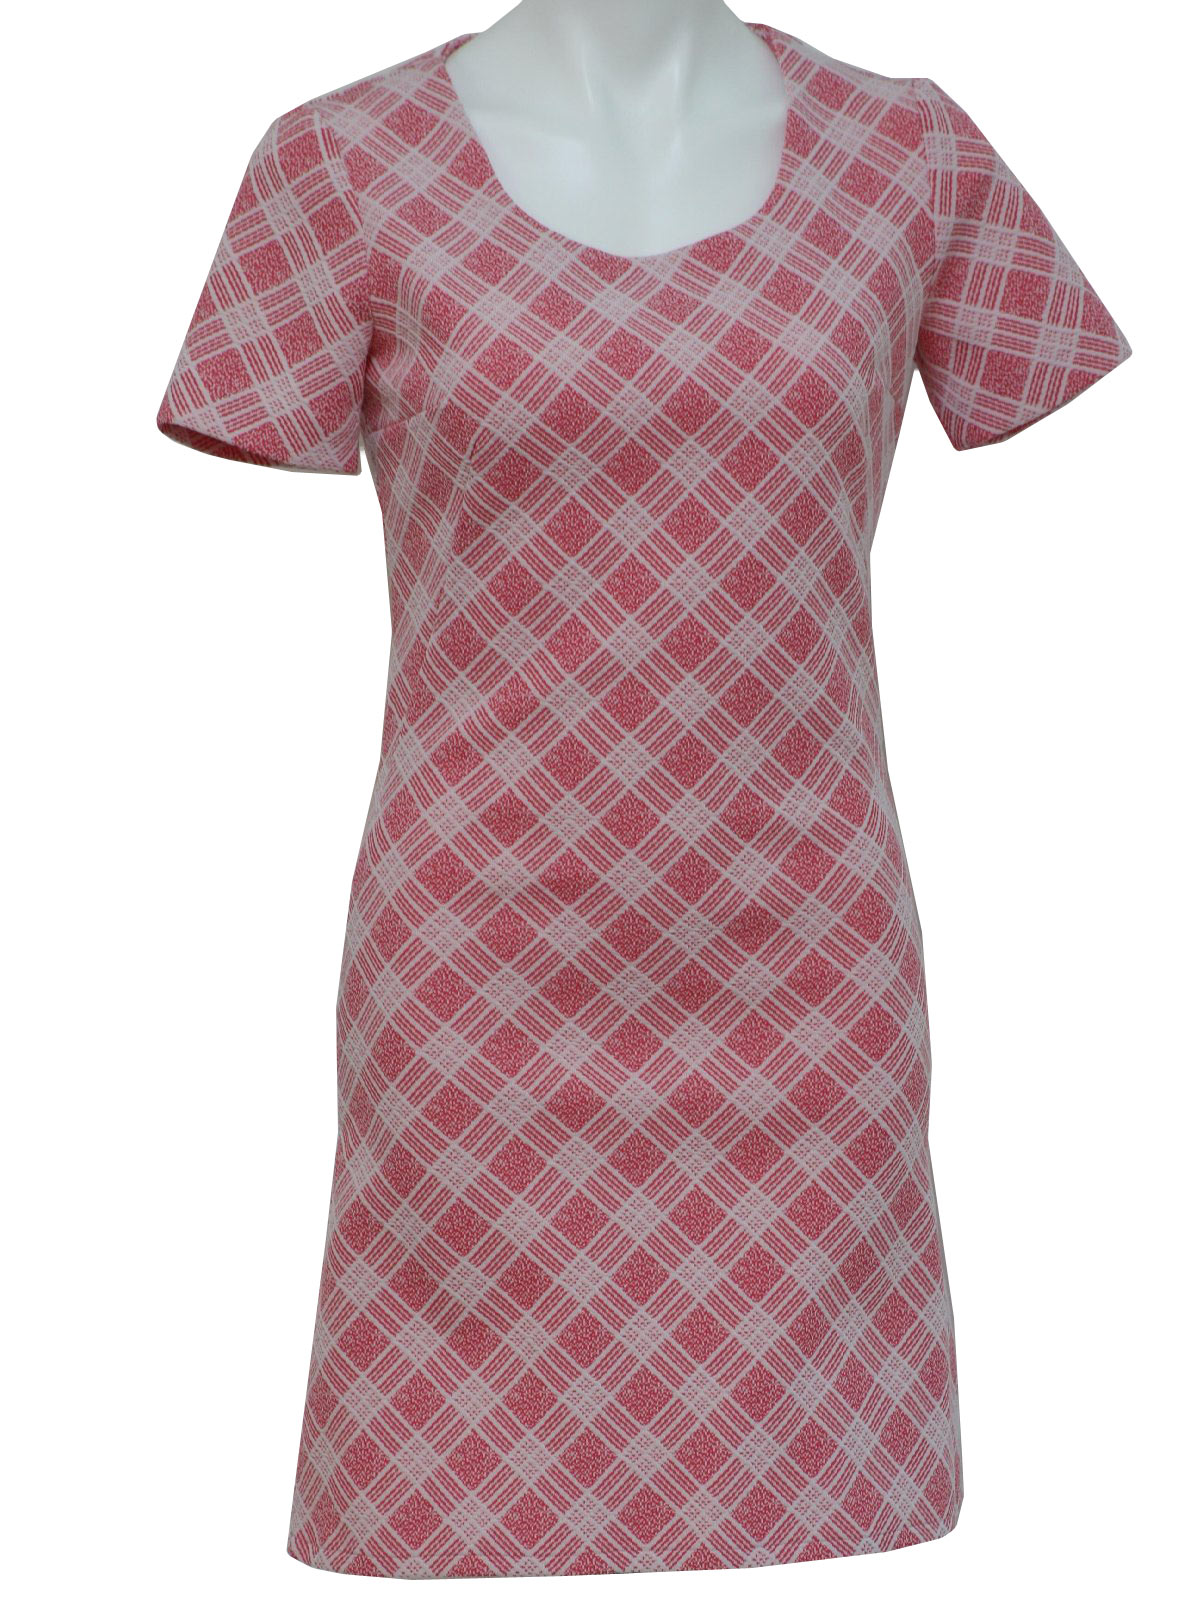 Retro 1970s Mini Dress: 70s -home sewn- Womens raspberry and white